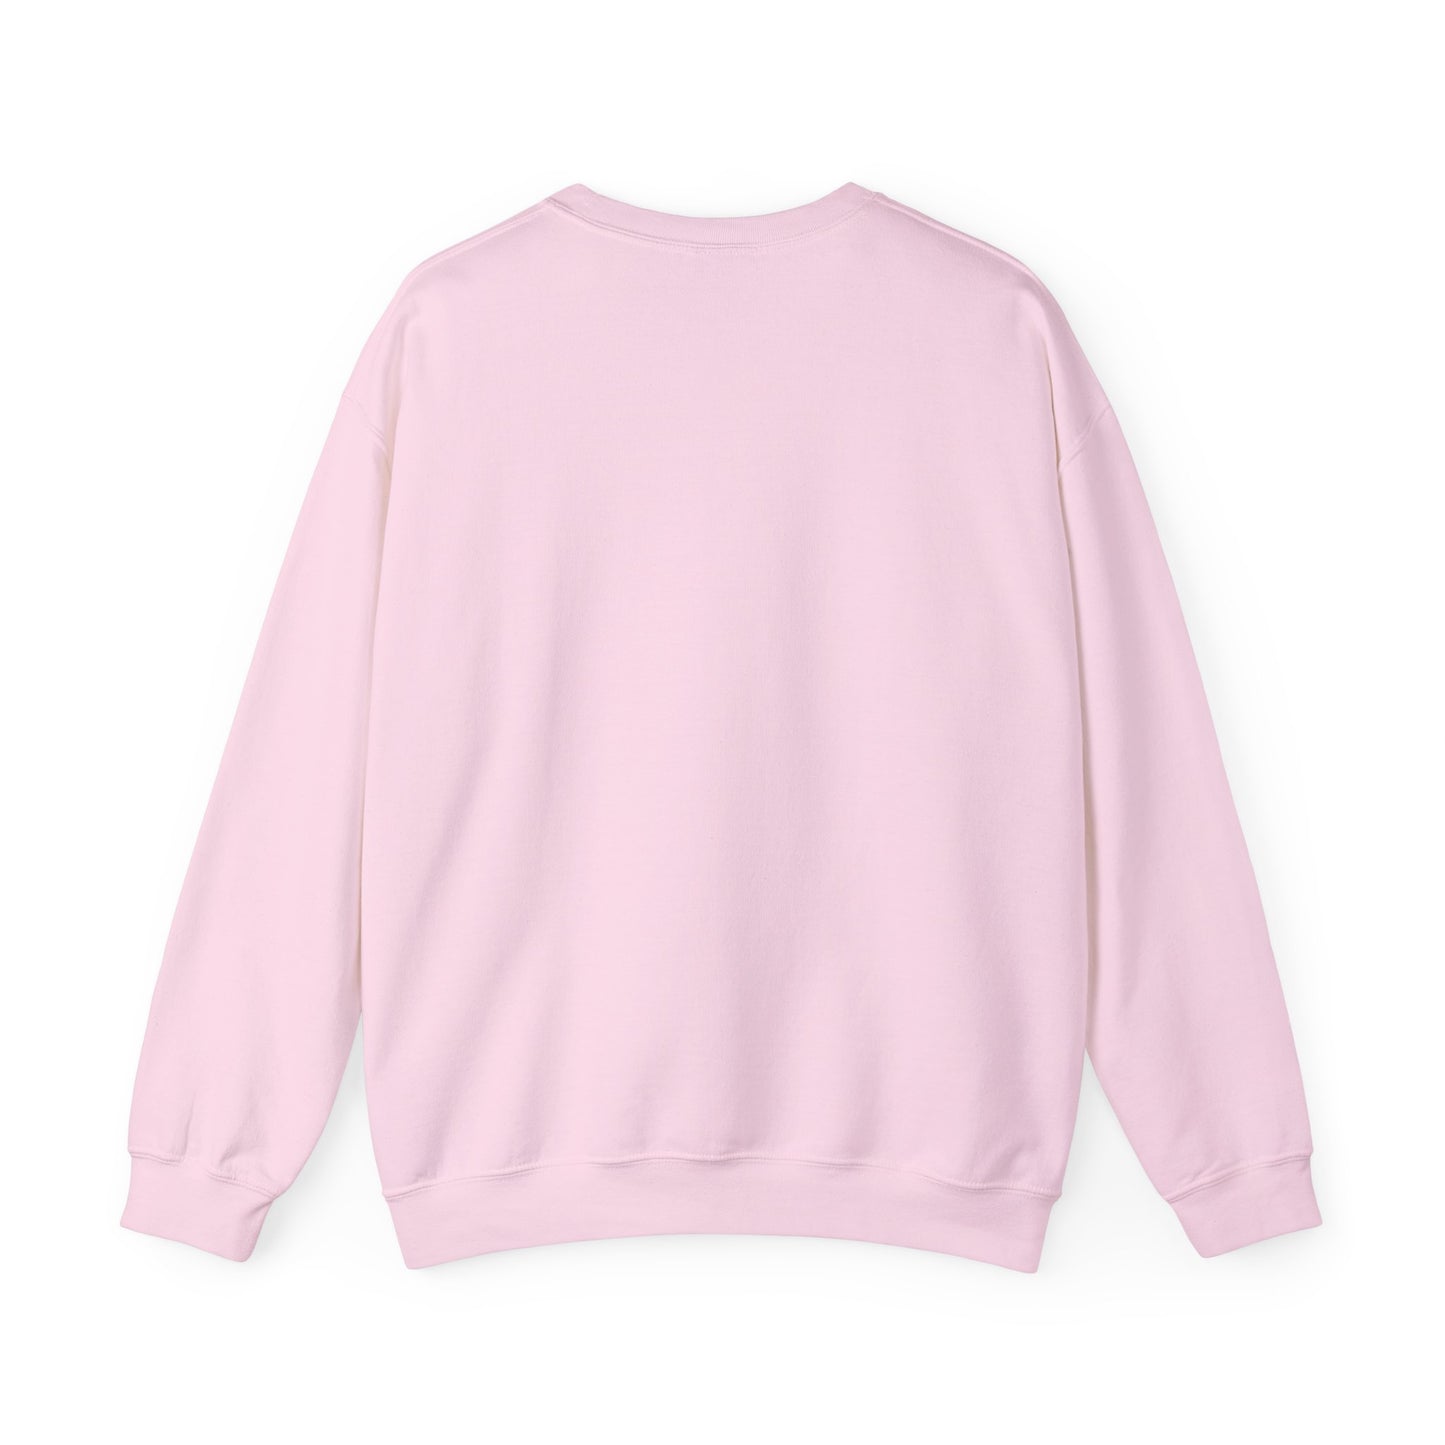 Pink Painted Love Heart - Unisex Crewneck Sweatshirt